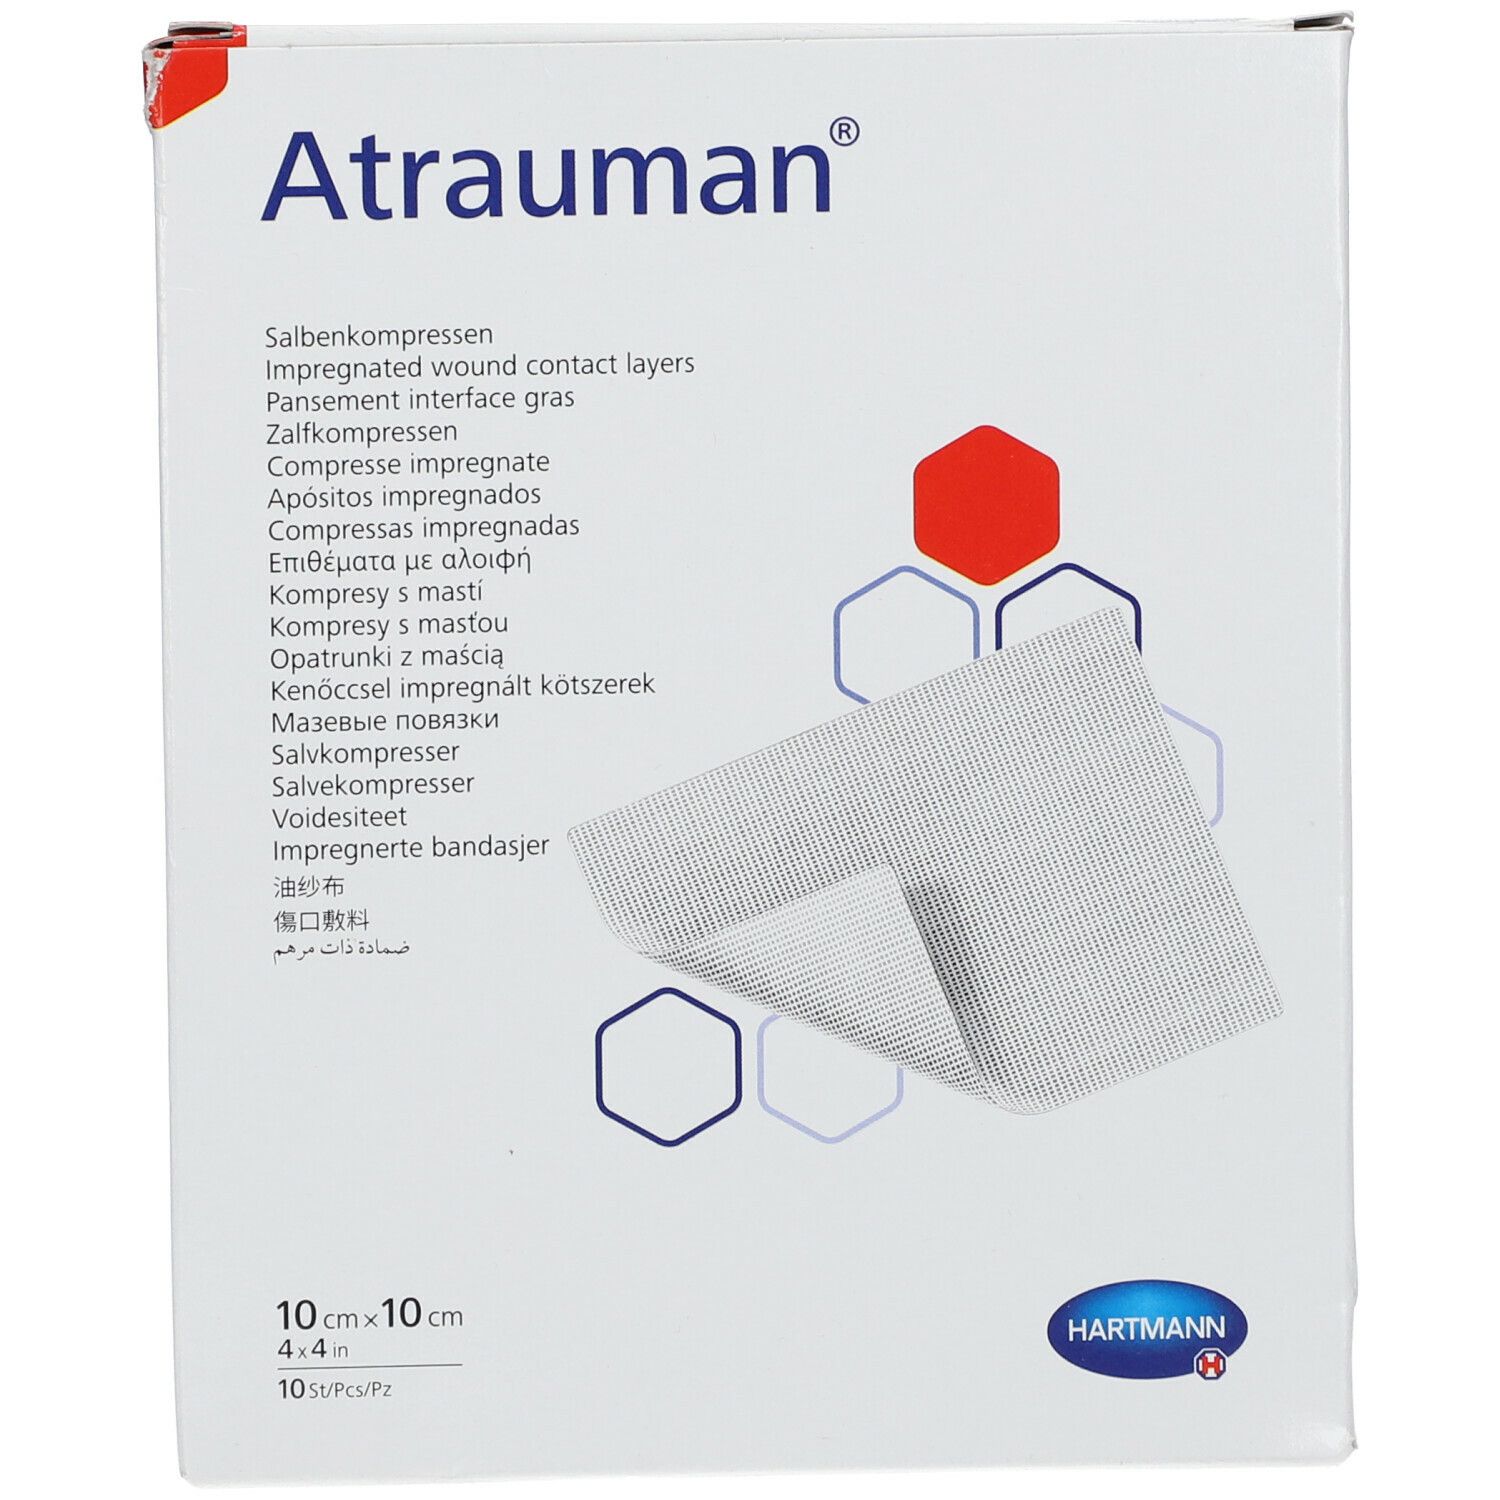 Atrauman® Pansement interface gras 10 cm x 10 cm